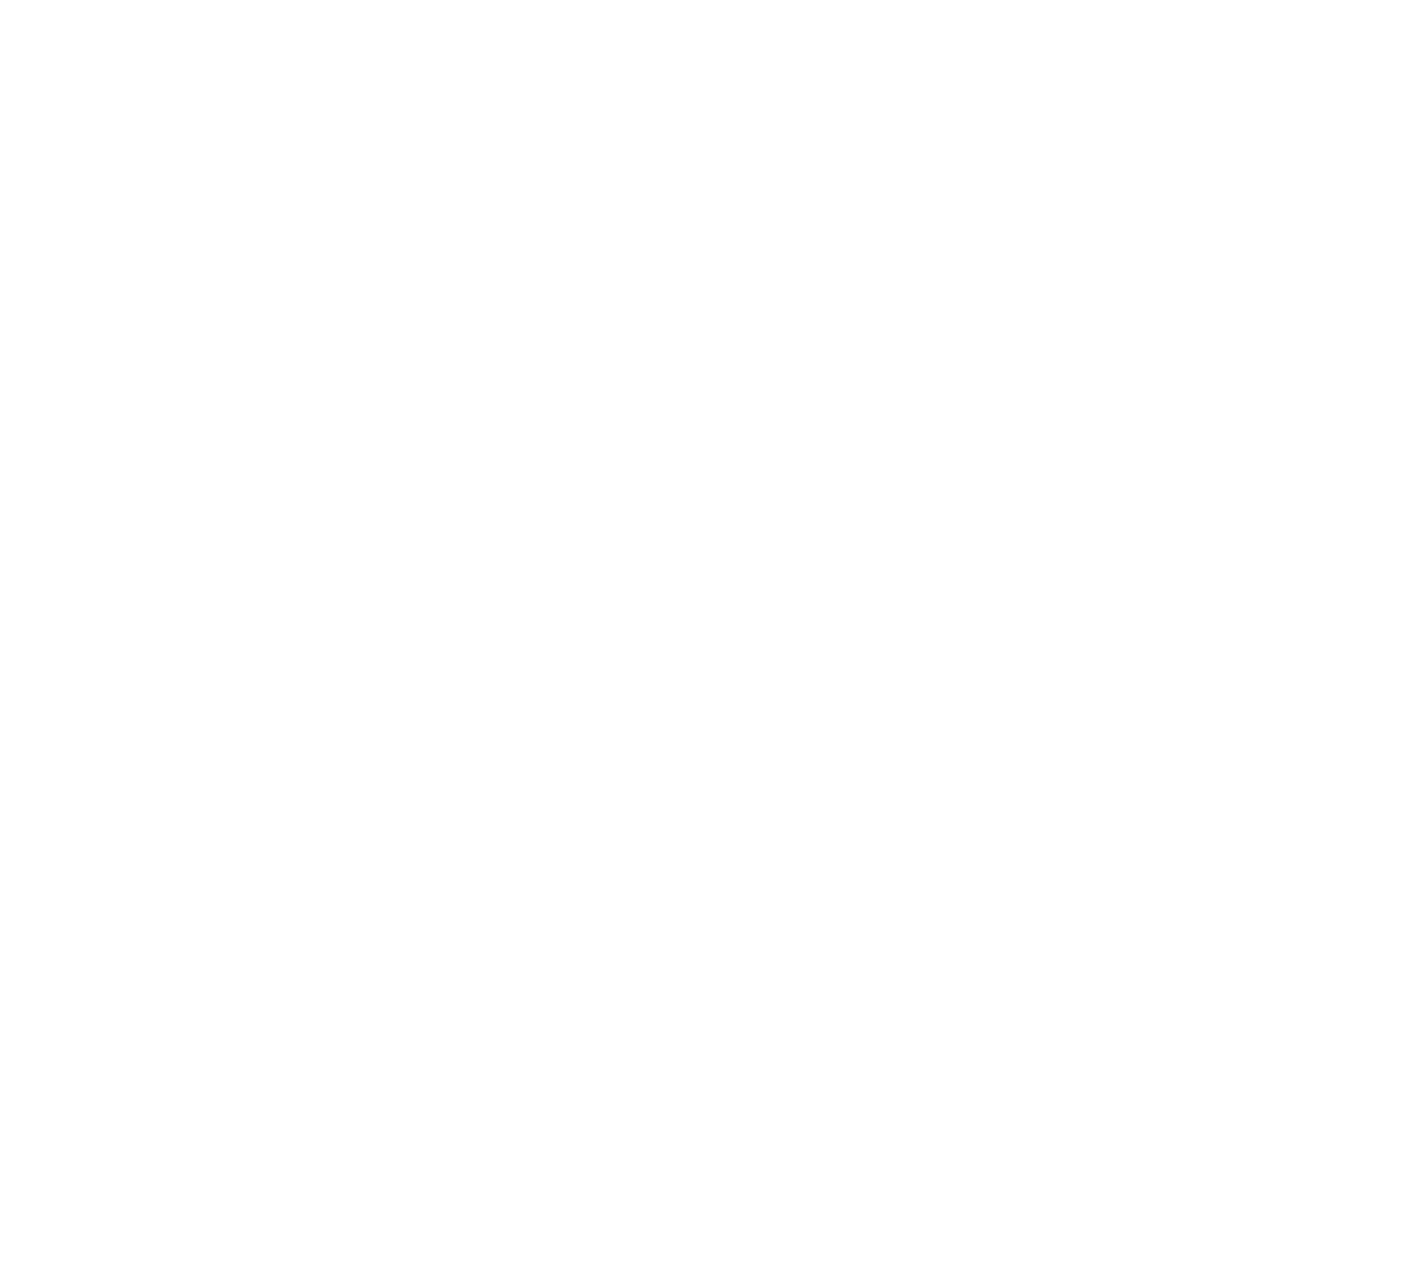 ADNEC Centre Abu Dhabi